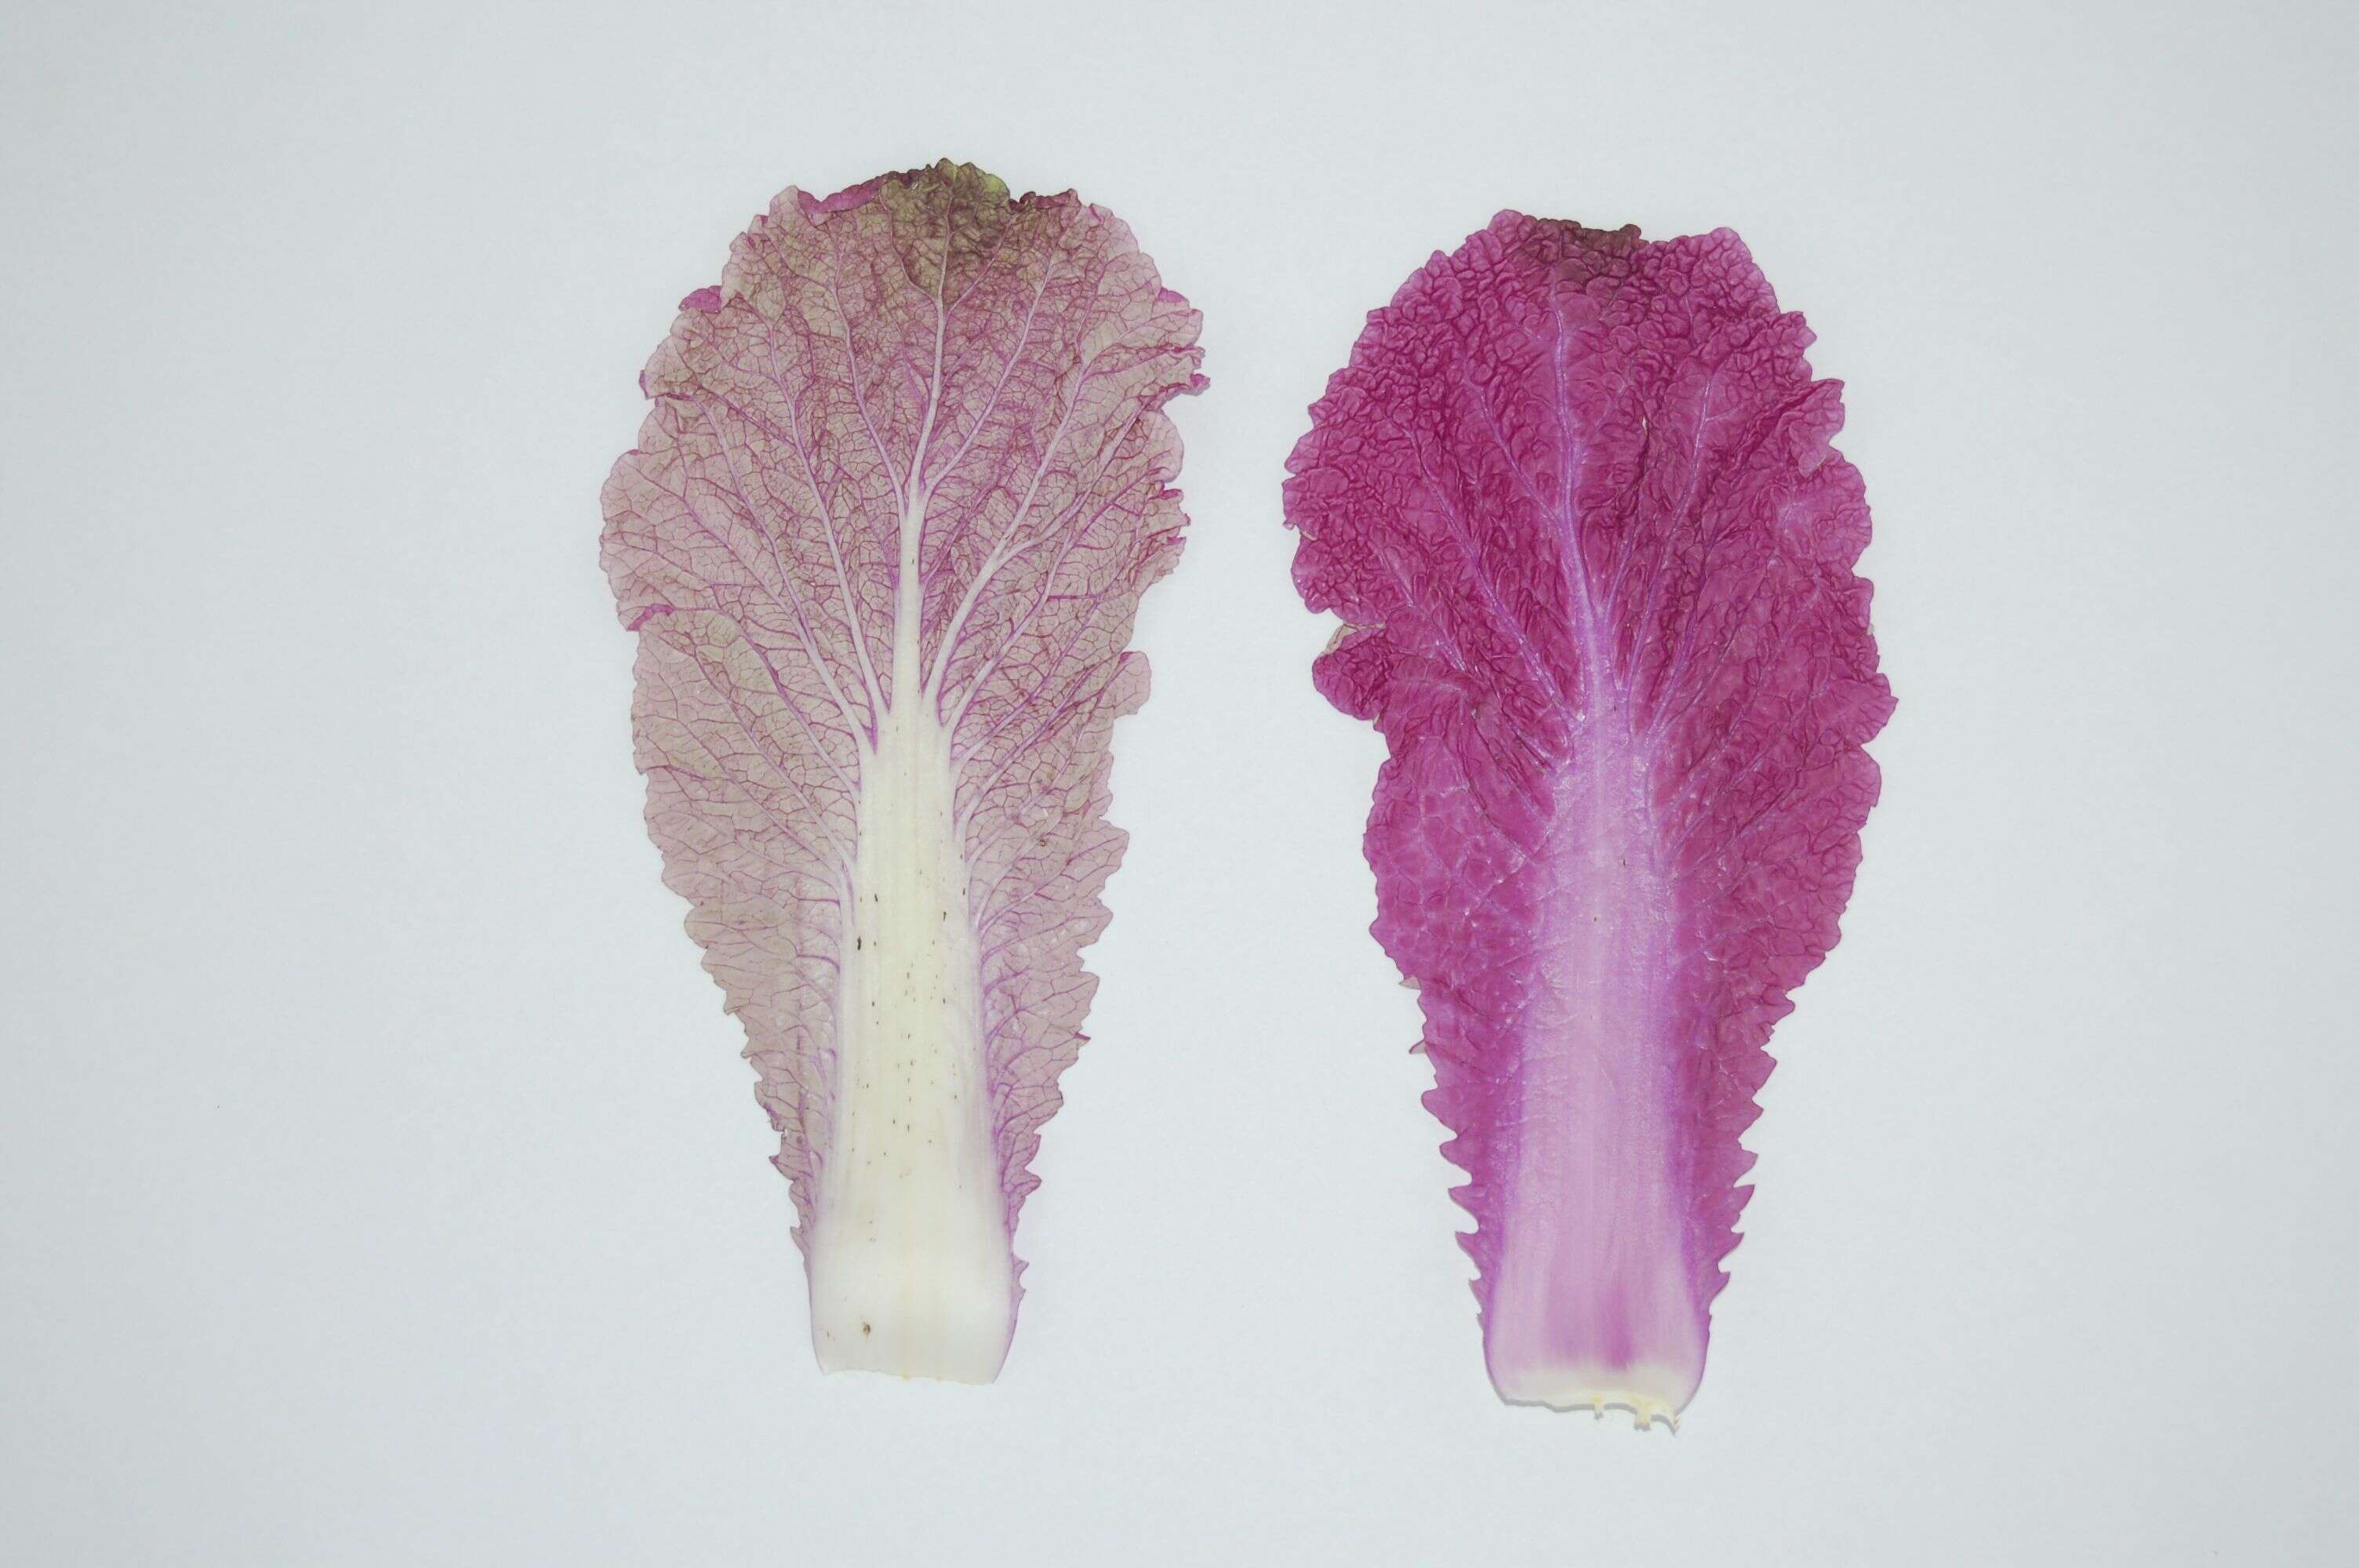 Image of Napa cabbage